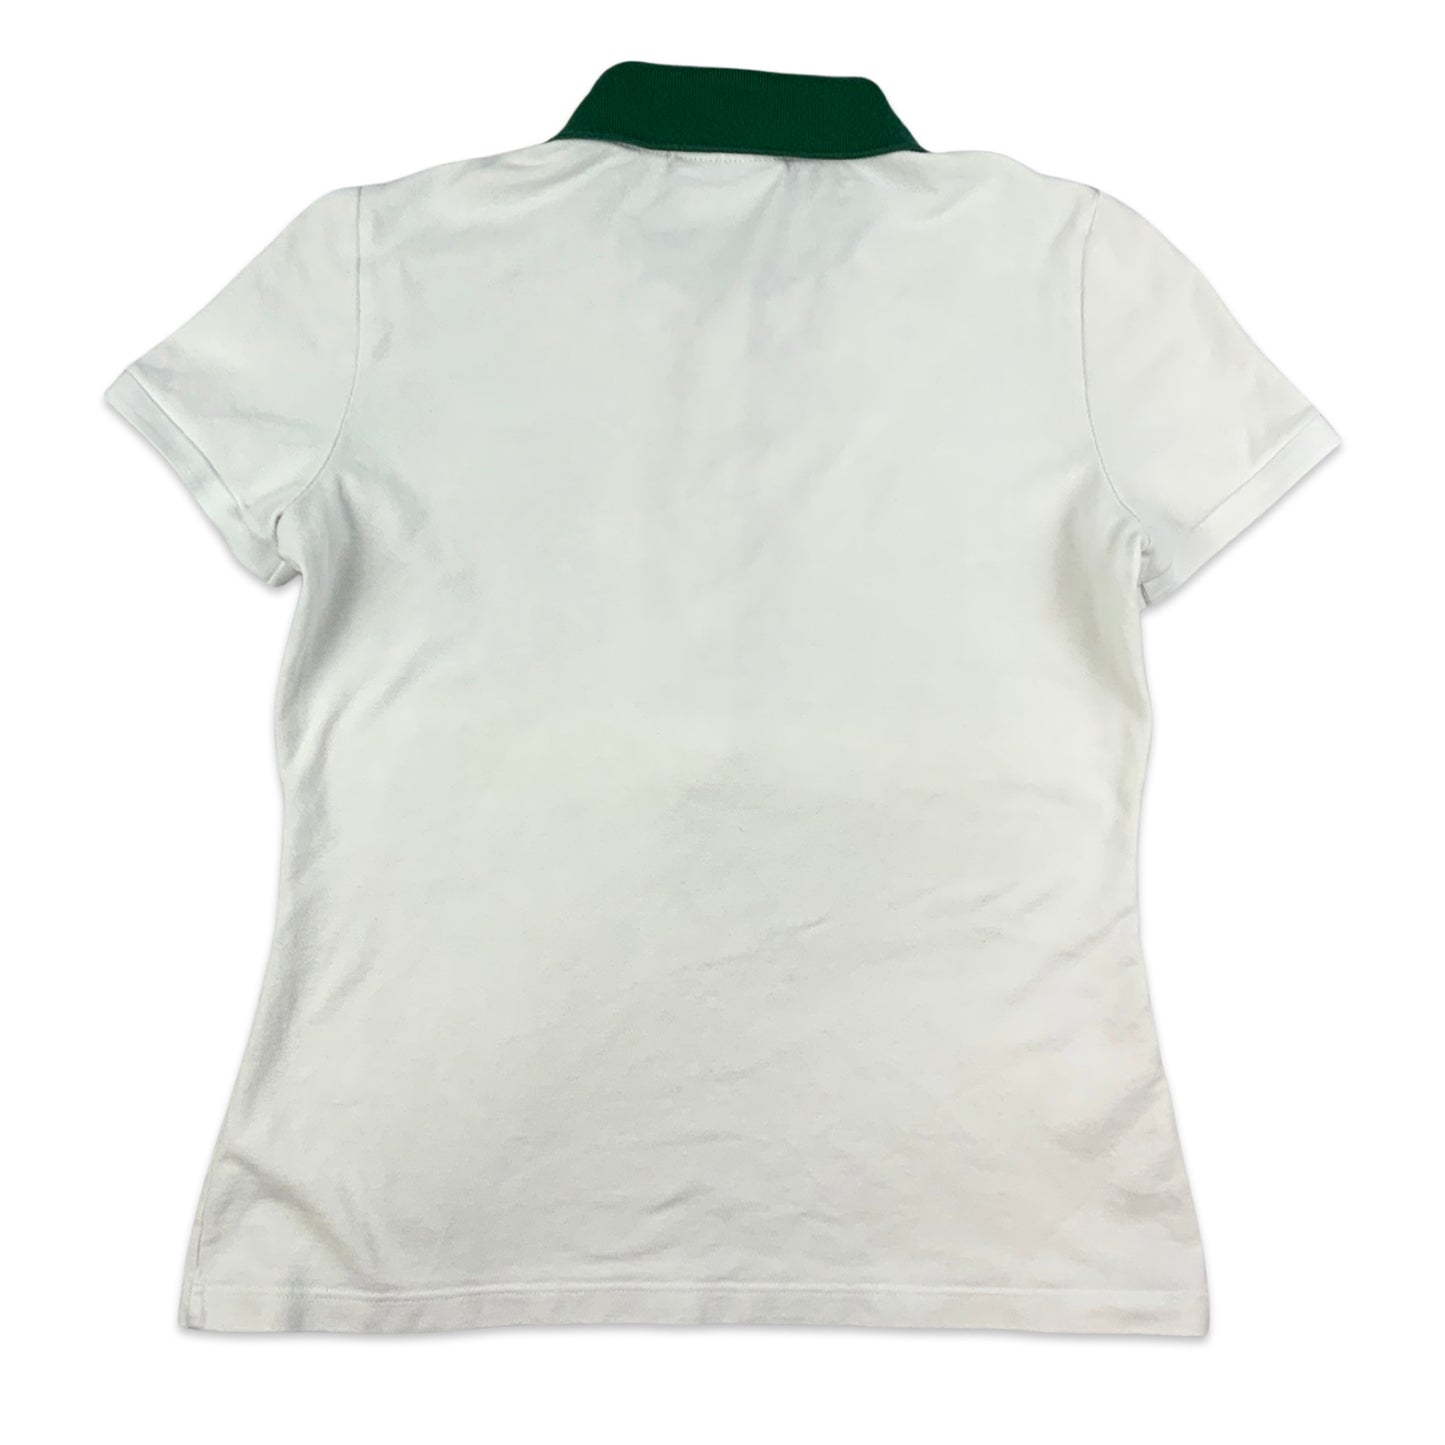 Lacoste White & Green Polo Shirt 6 8